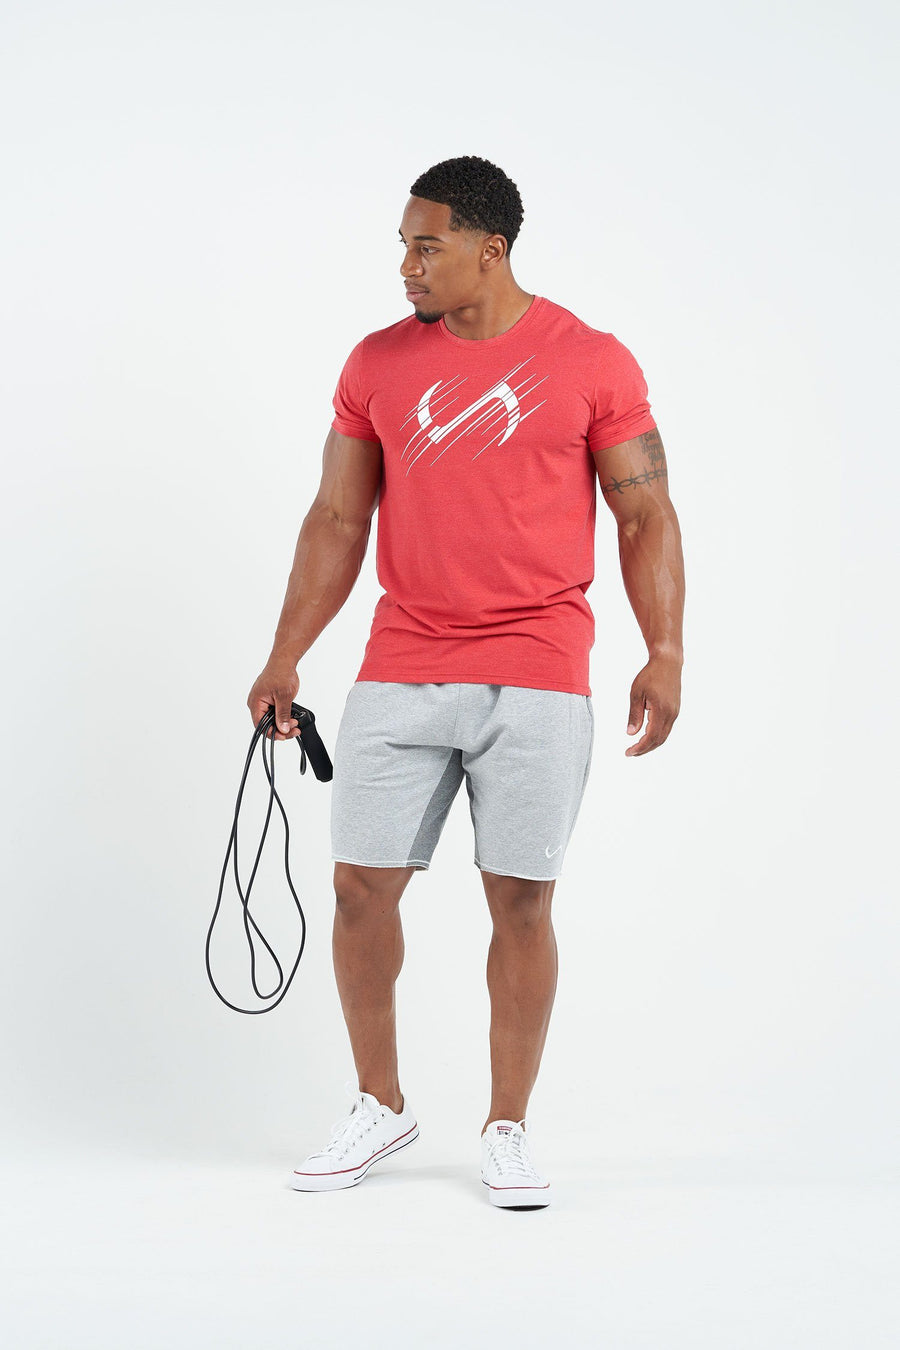 TLF Lift Gym T-Shirt - Gym T Shirts For Men - Red 6